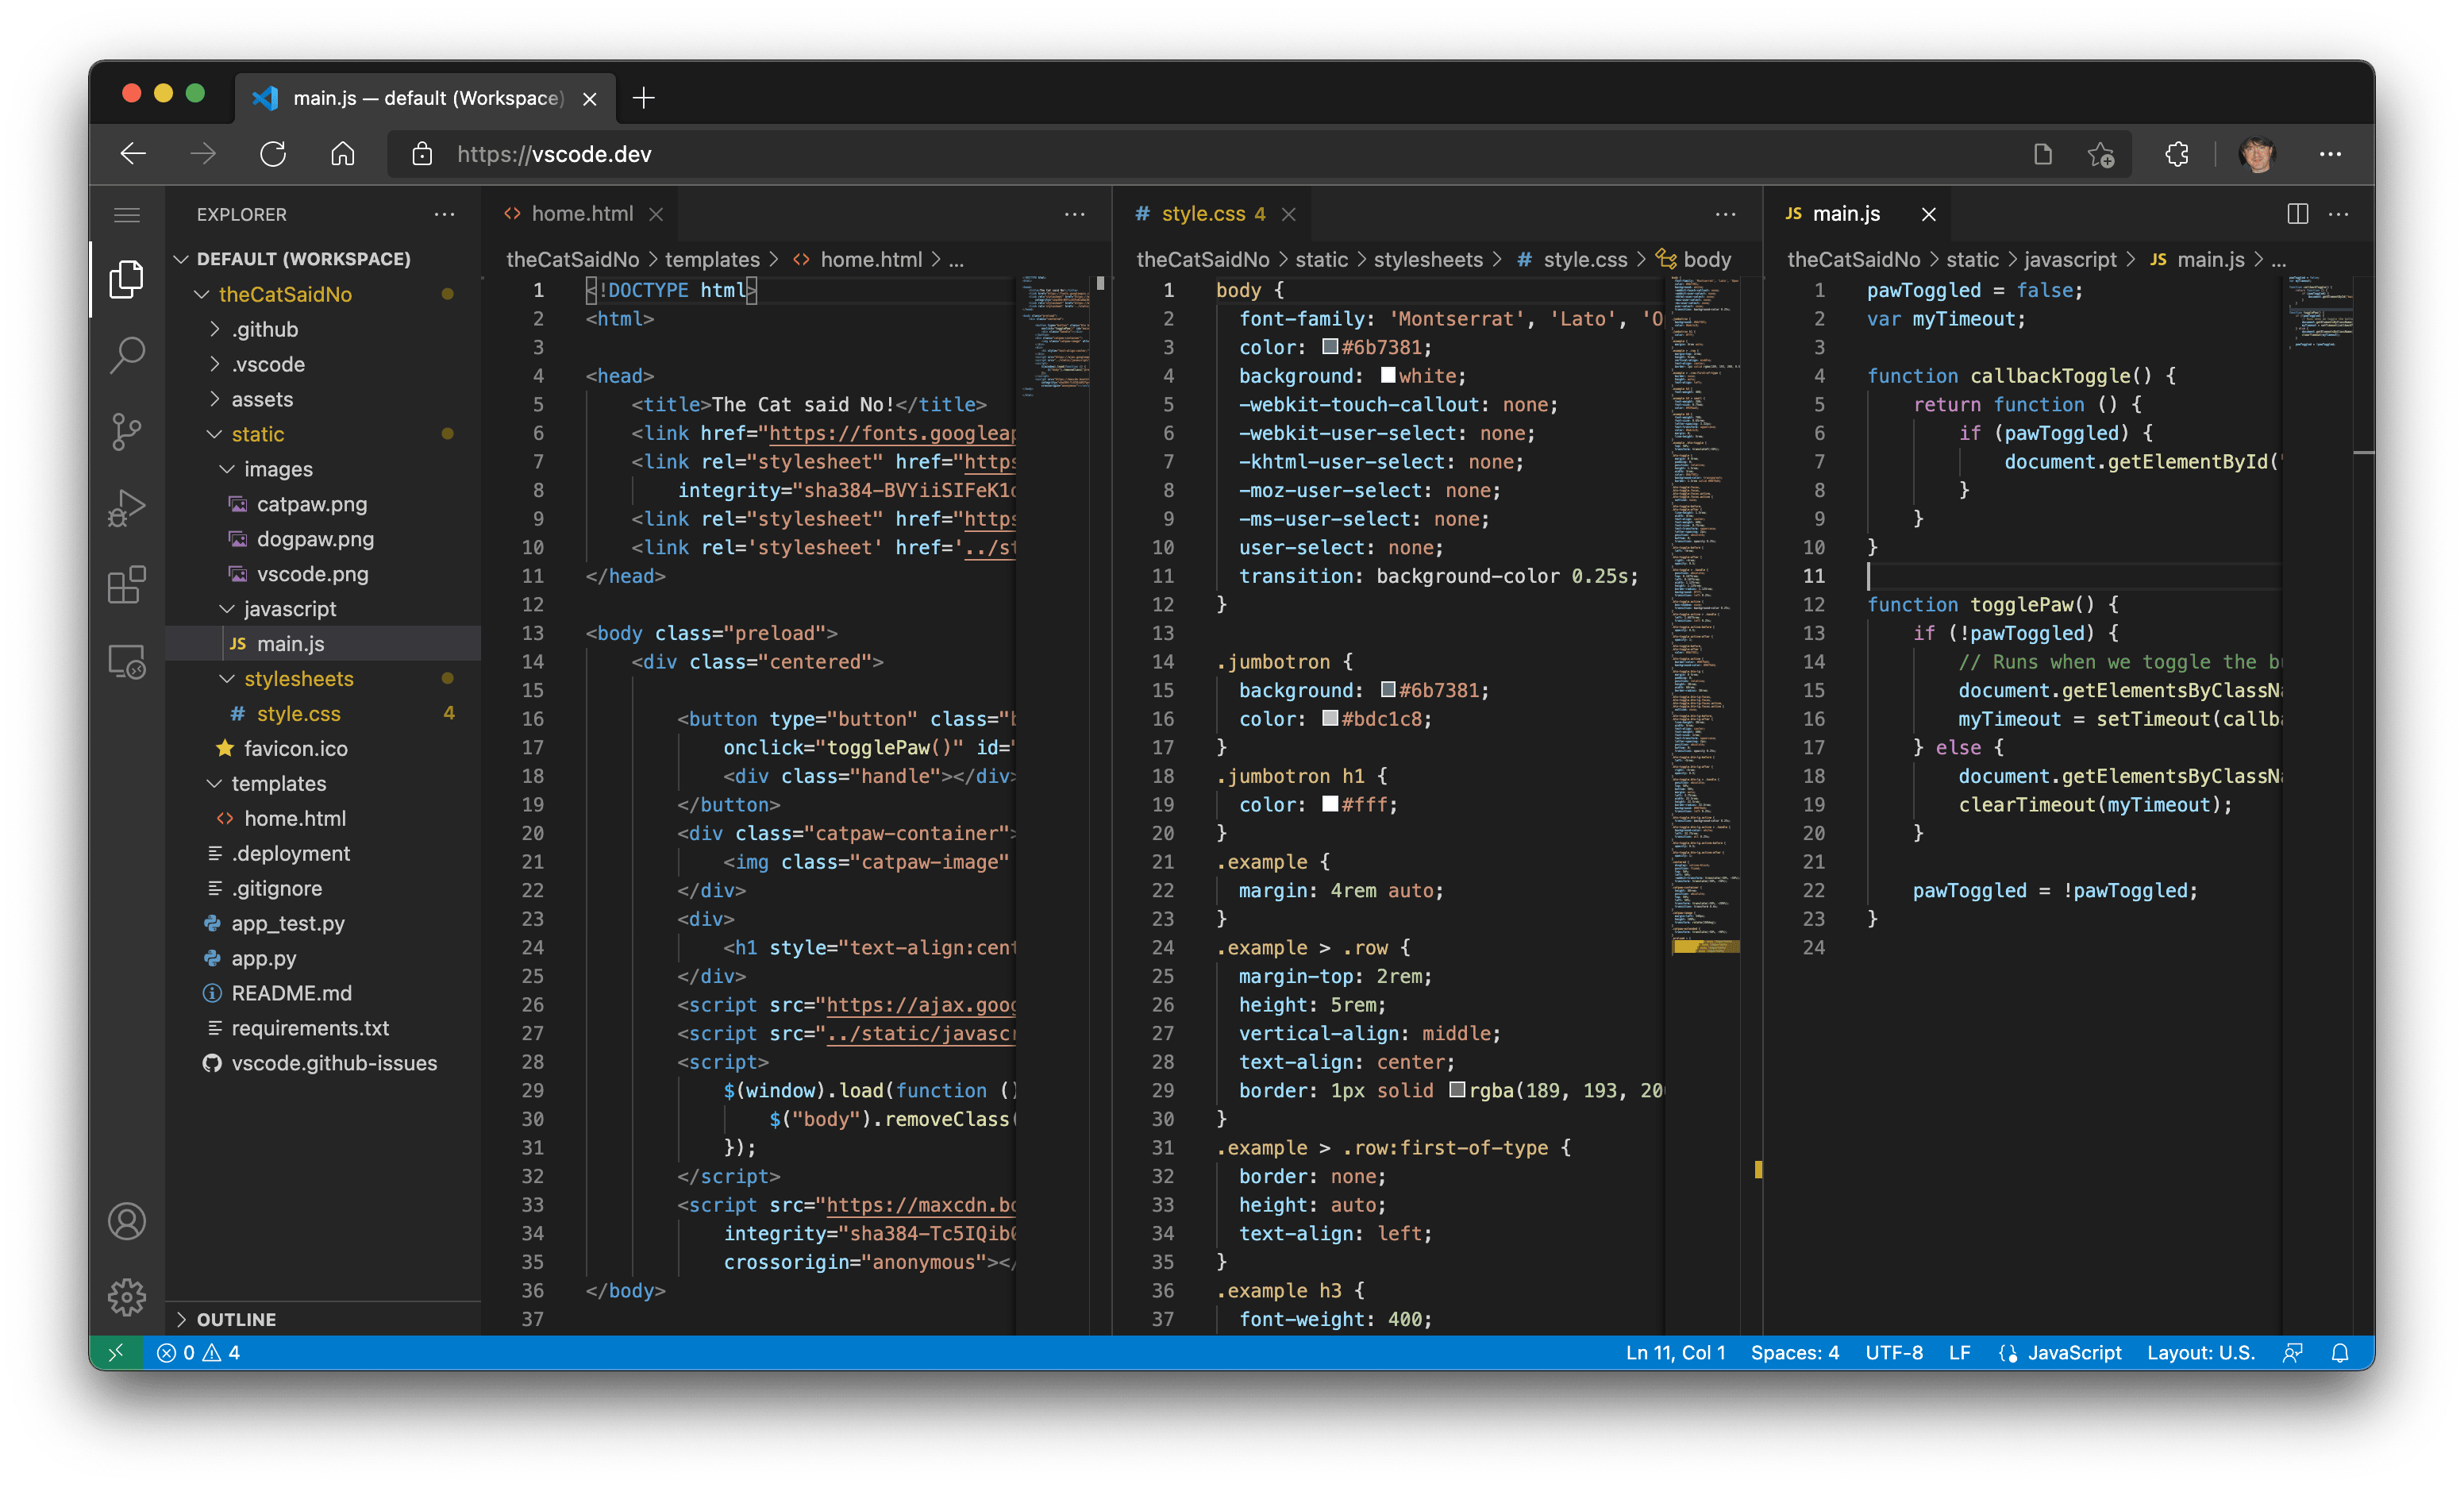  Screen showing three columns of code on VS Code Node.js development tool